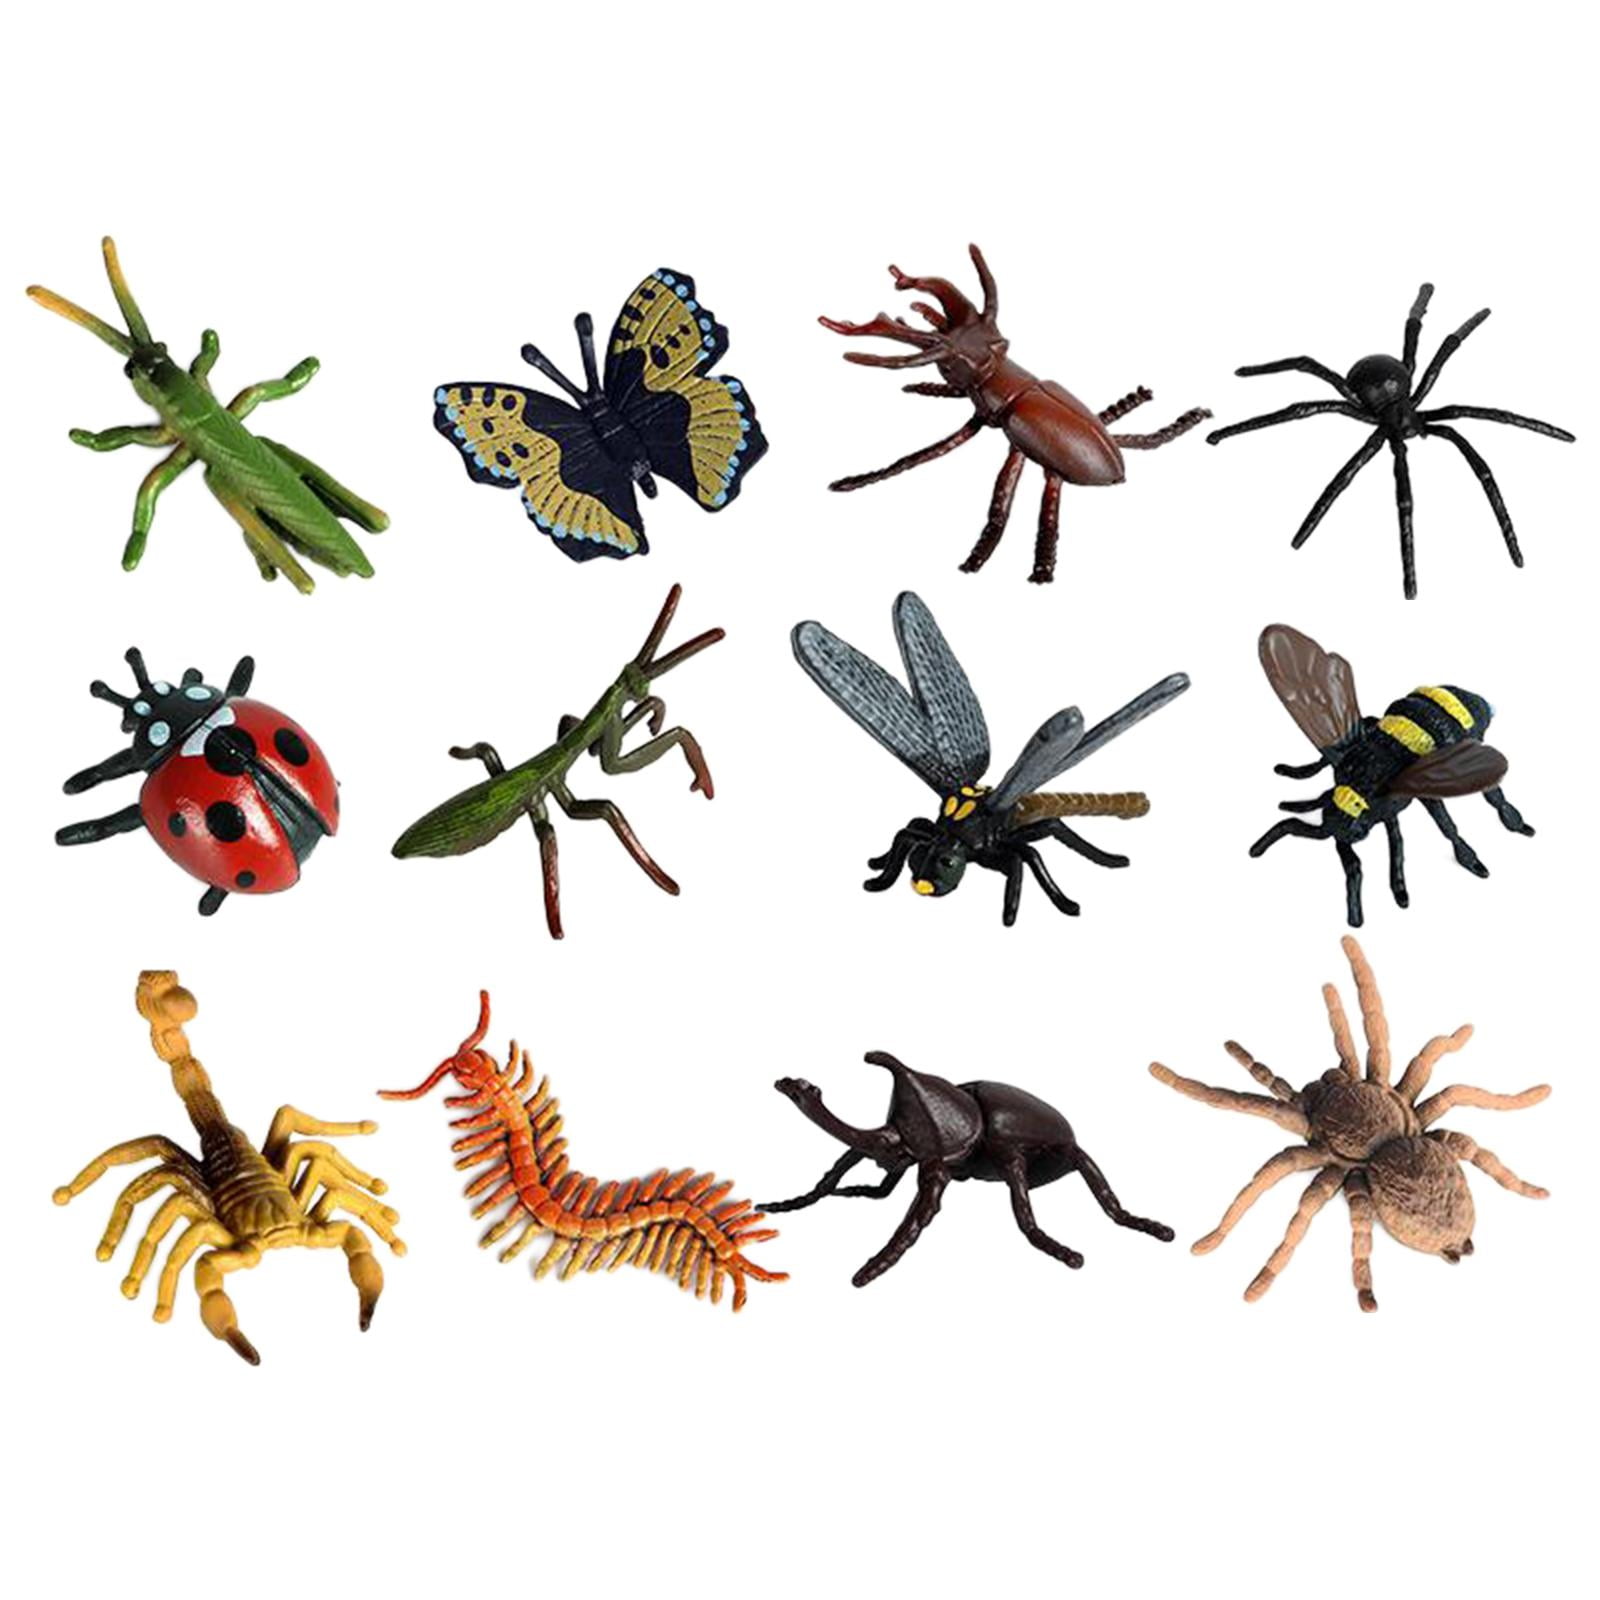 Bulk Lot 24 x Sticky Creatures Mixed Bat Centipede Spider Scorpion Novelty 